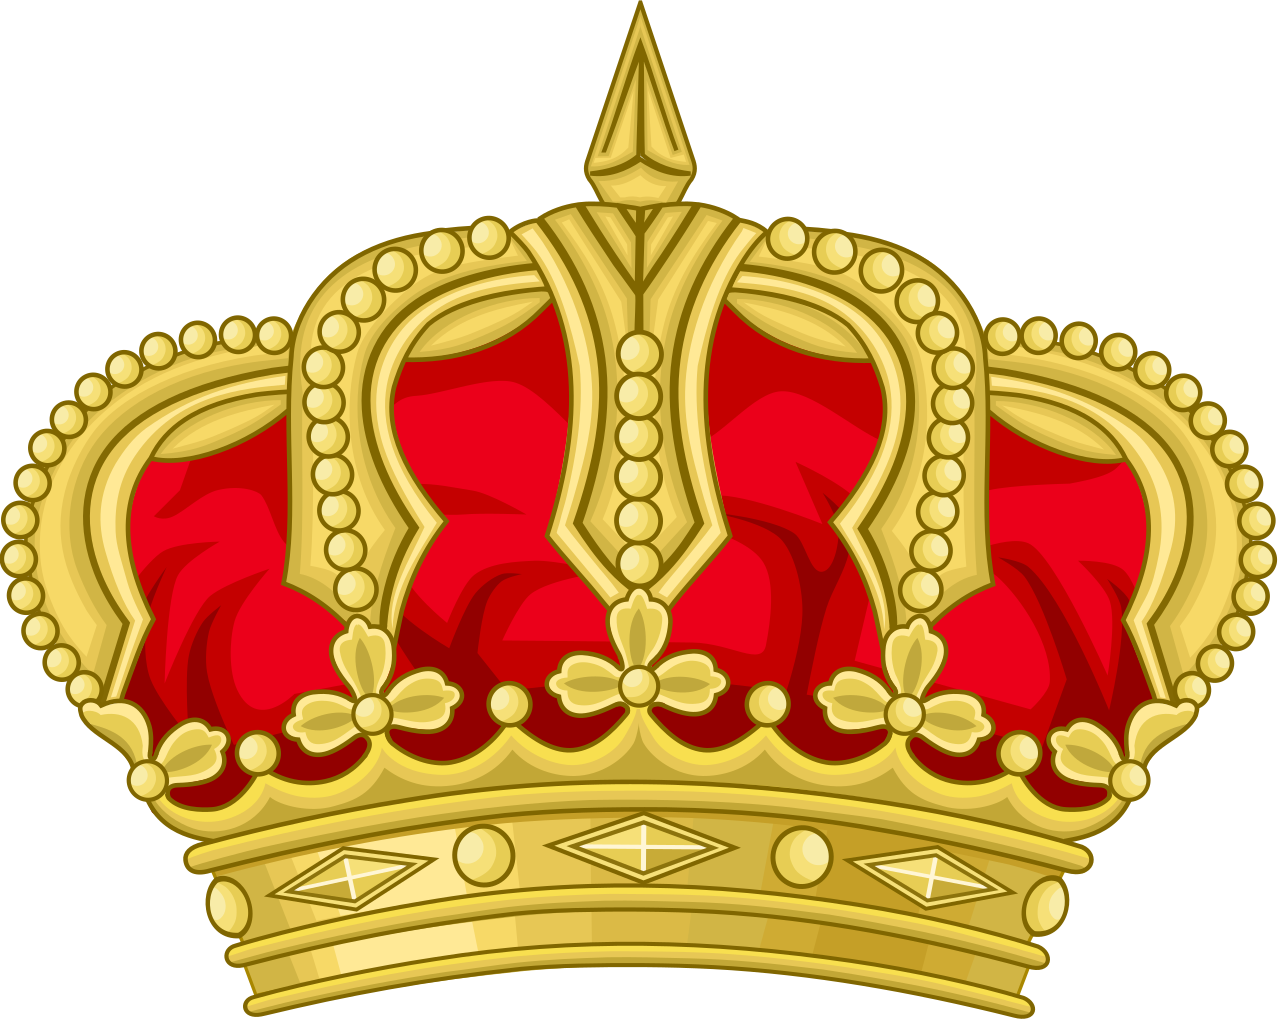 royal crown jordan photo download image #10718